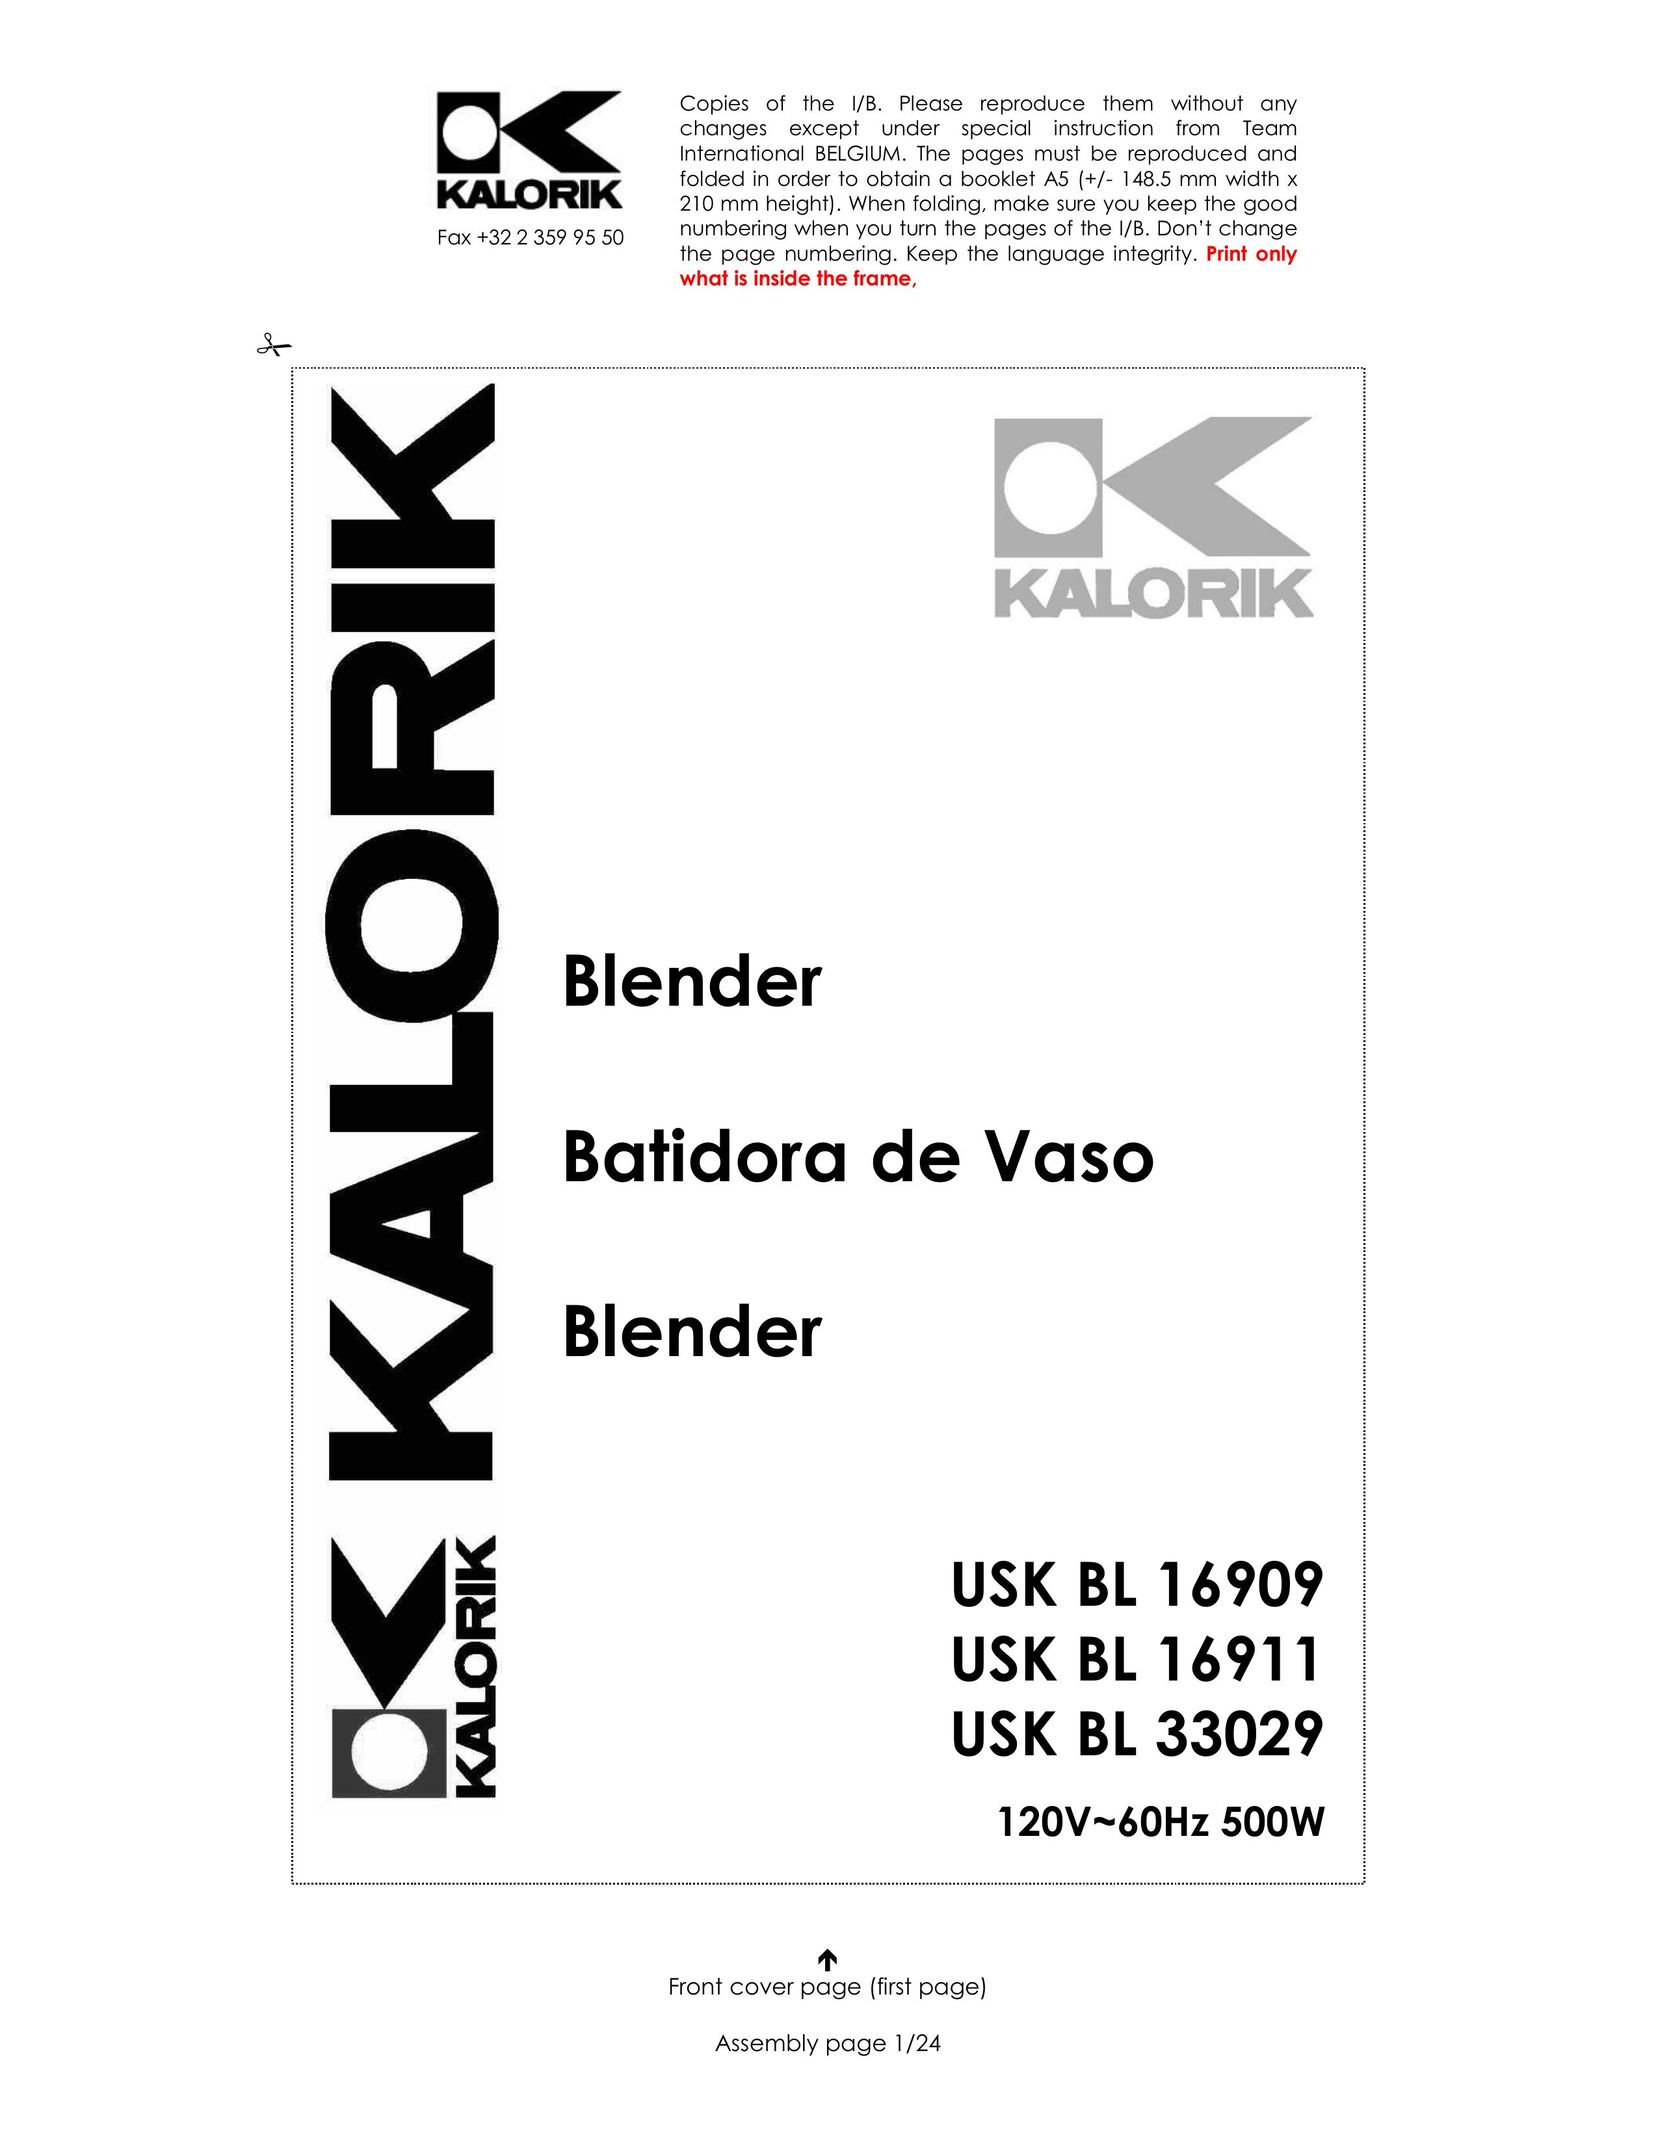 Kalorik USK BL 16911 Blender User Manual